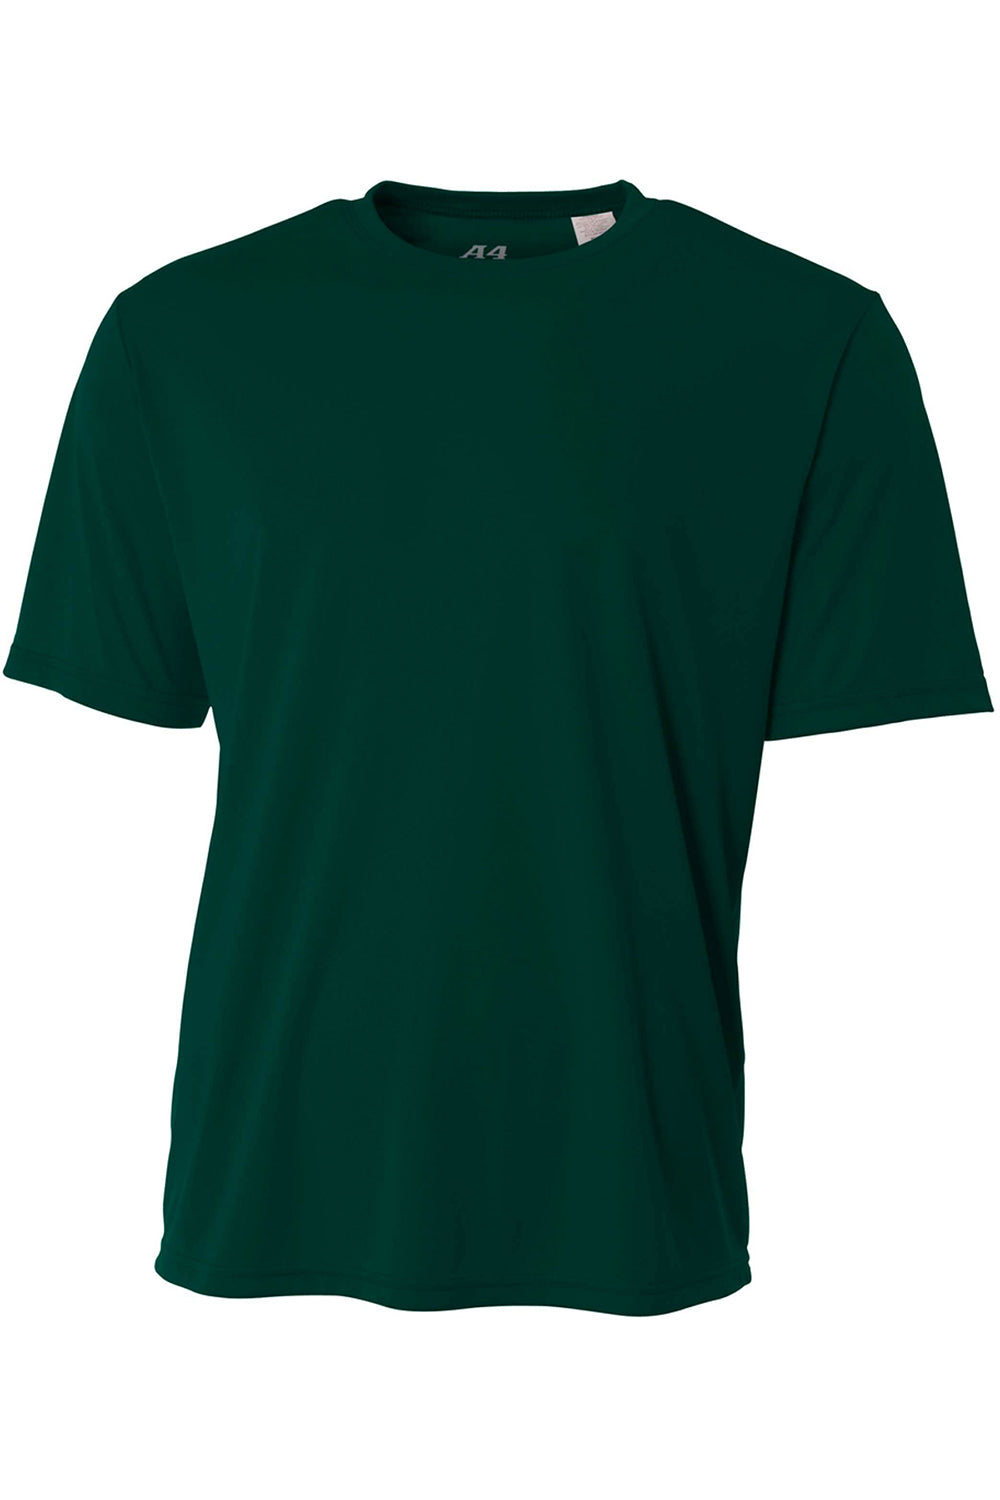 A4 N3142 Mens Performance Moisture Wicking Short Sleeve Crewneck T-Shirt Forest Green Flat Front